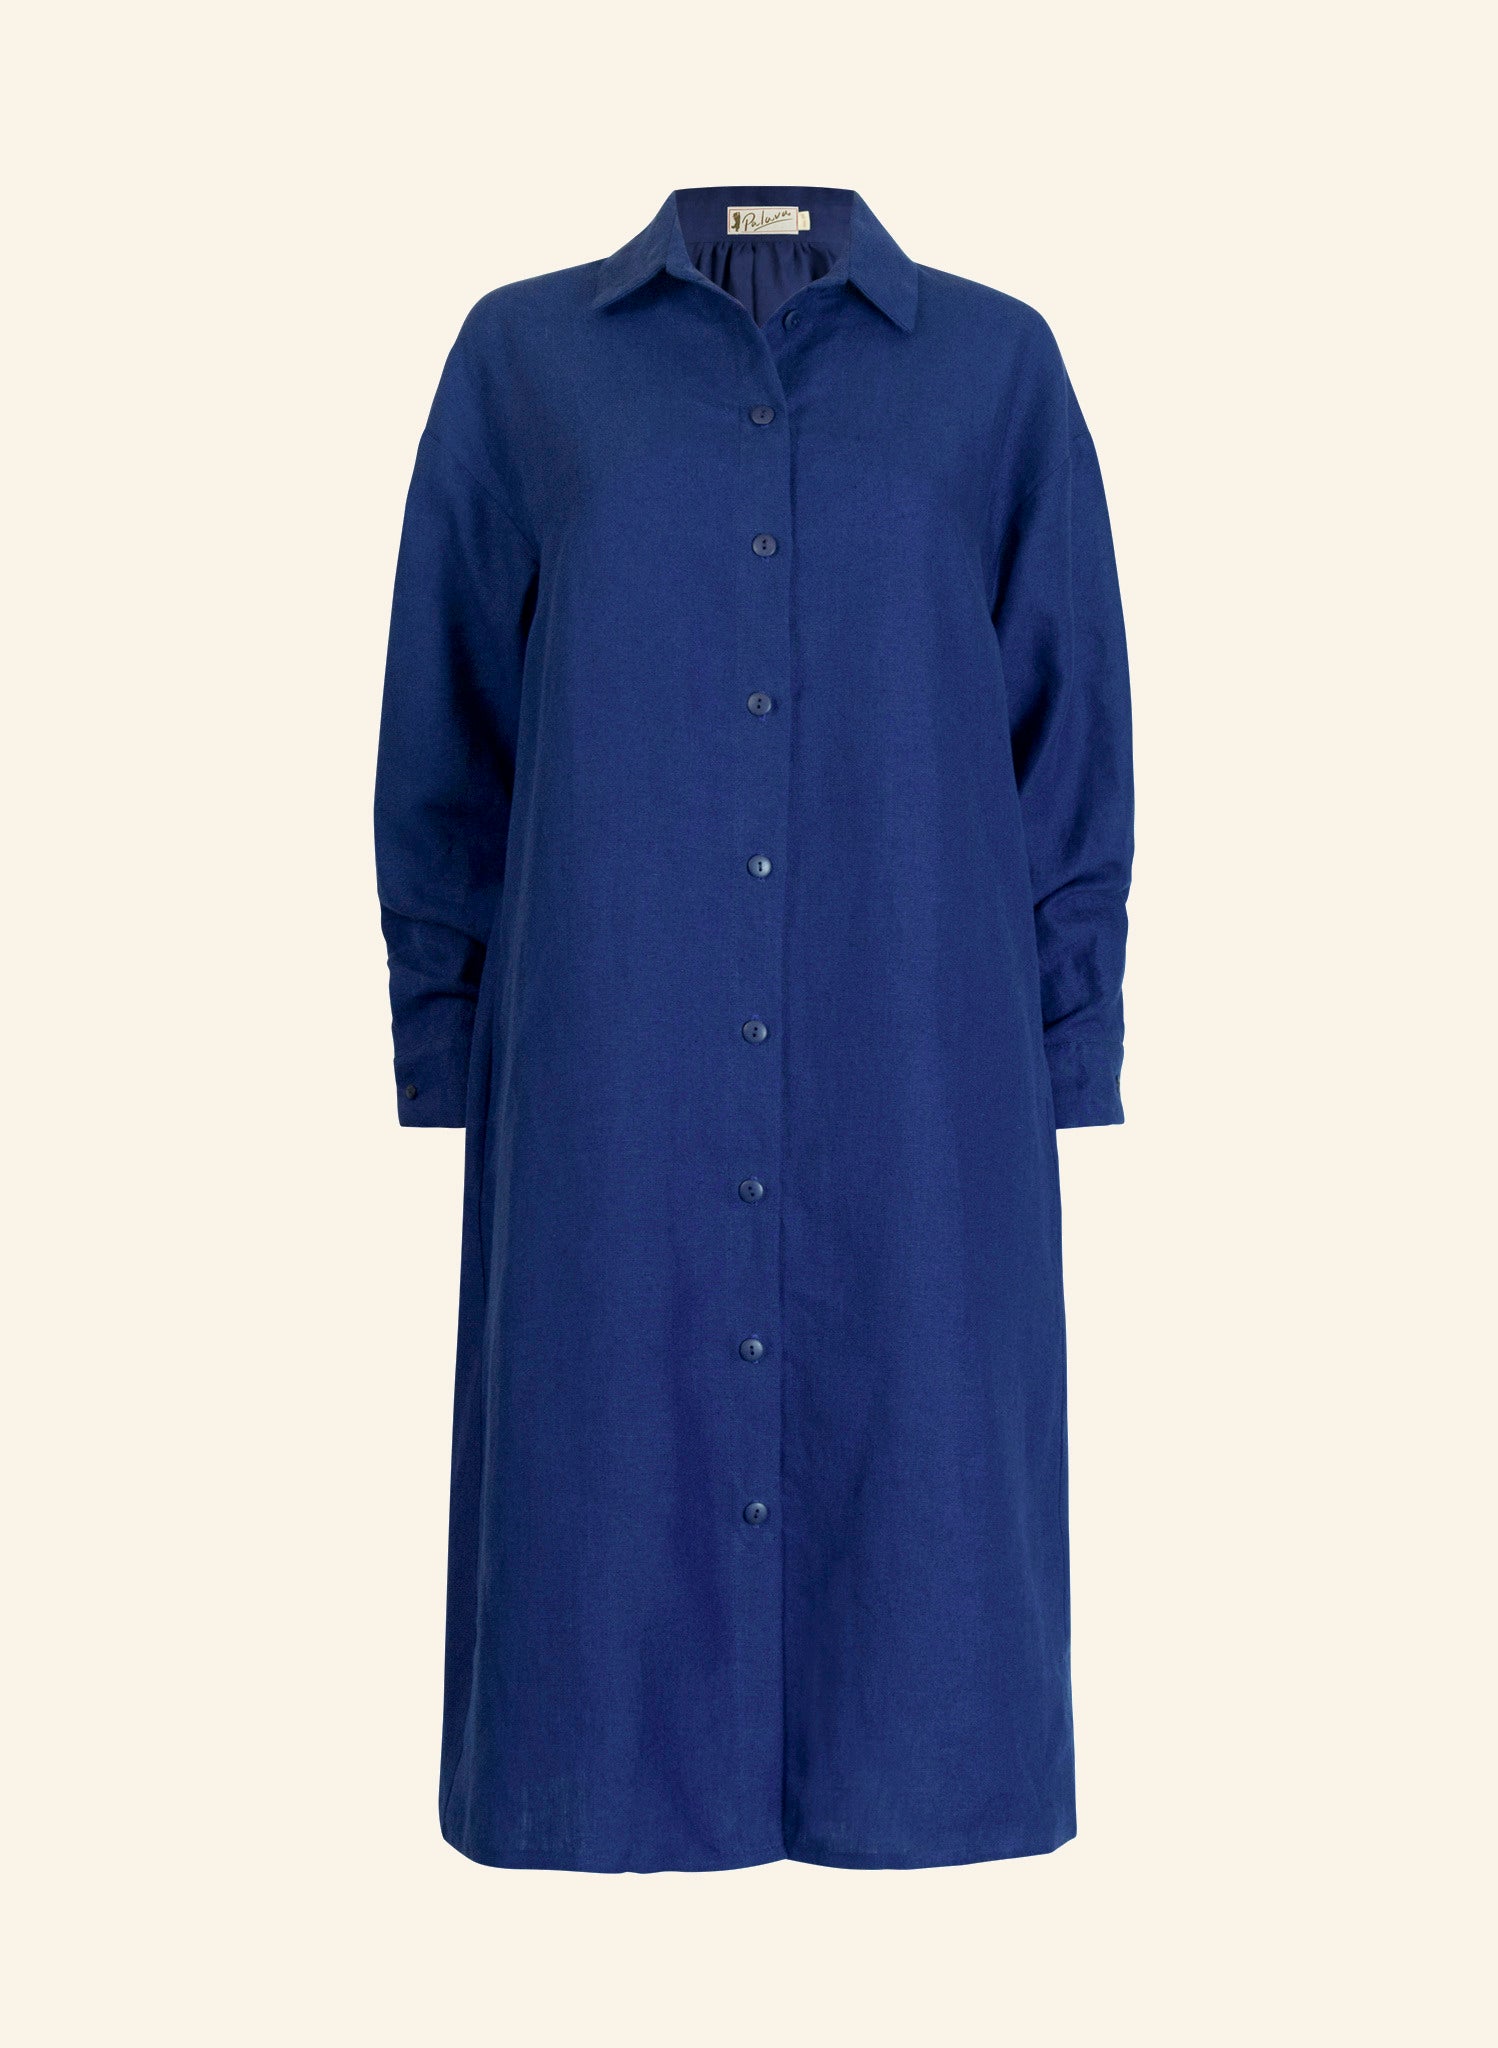 Izzy - Navy Linen Dress